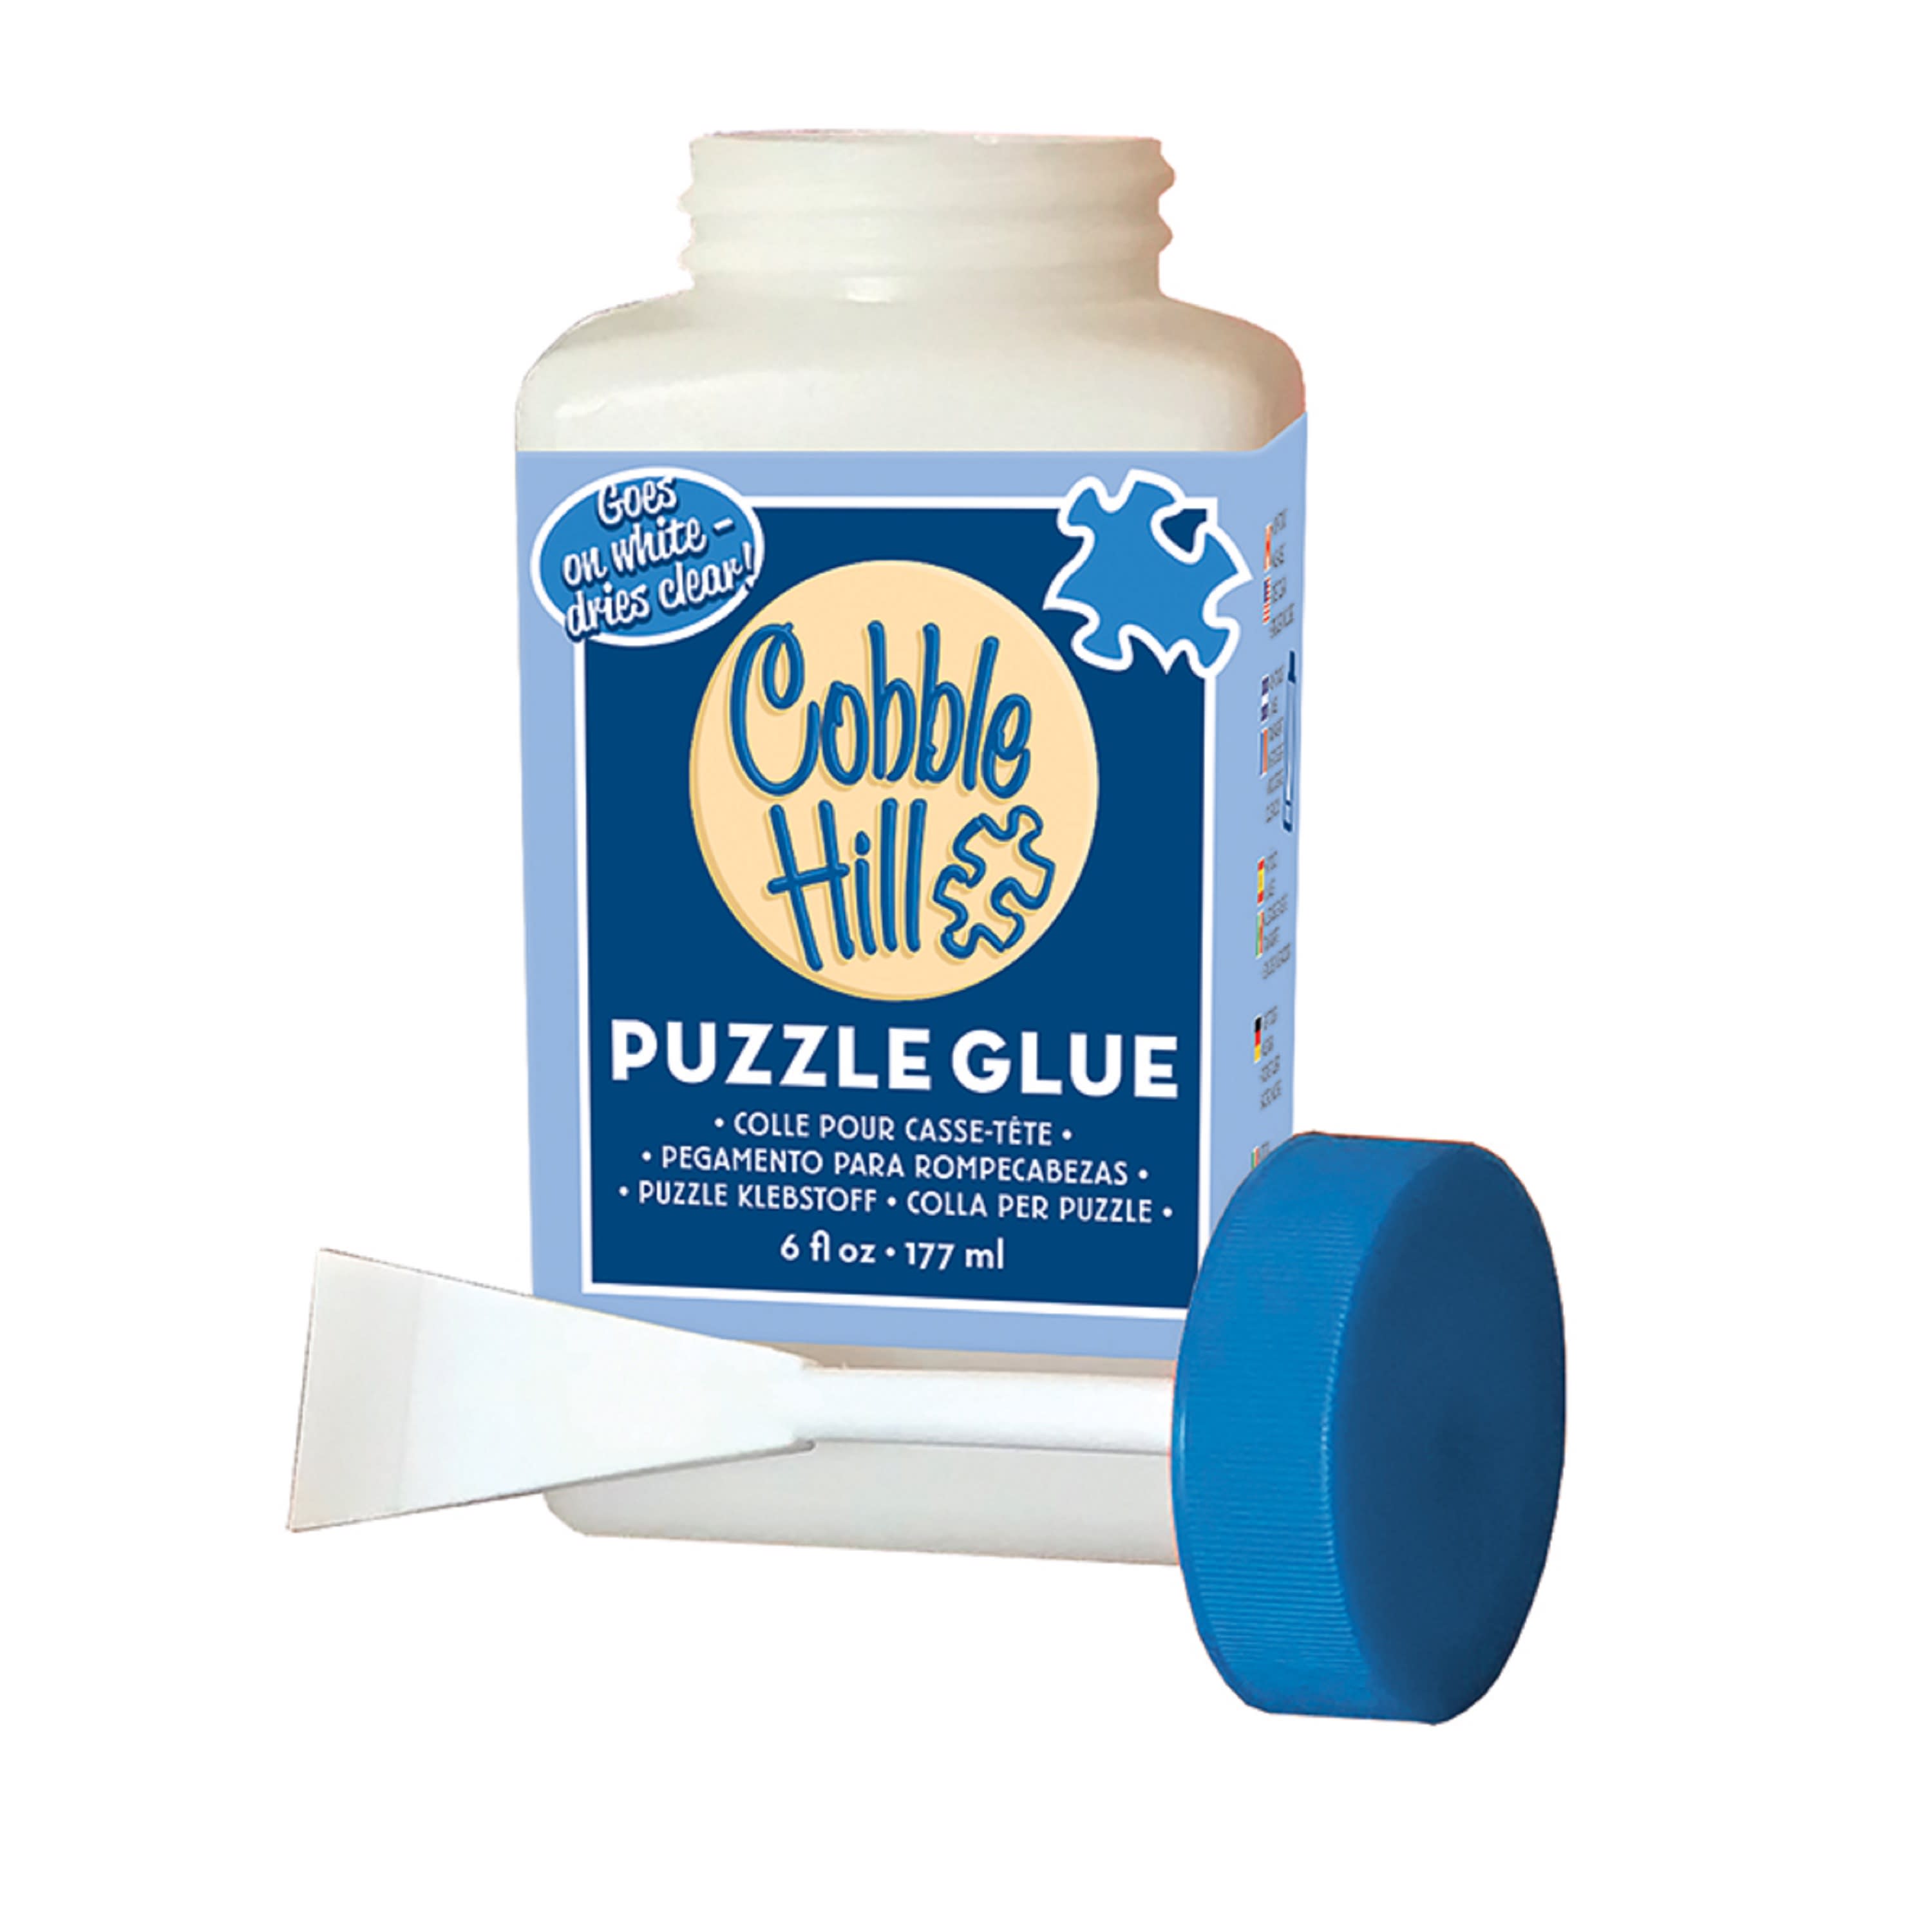 Cobble Hill Puzzle Glue